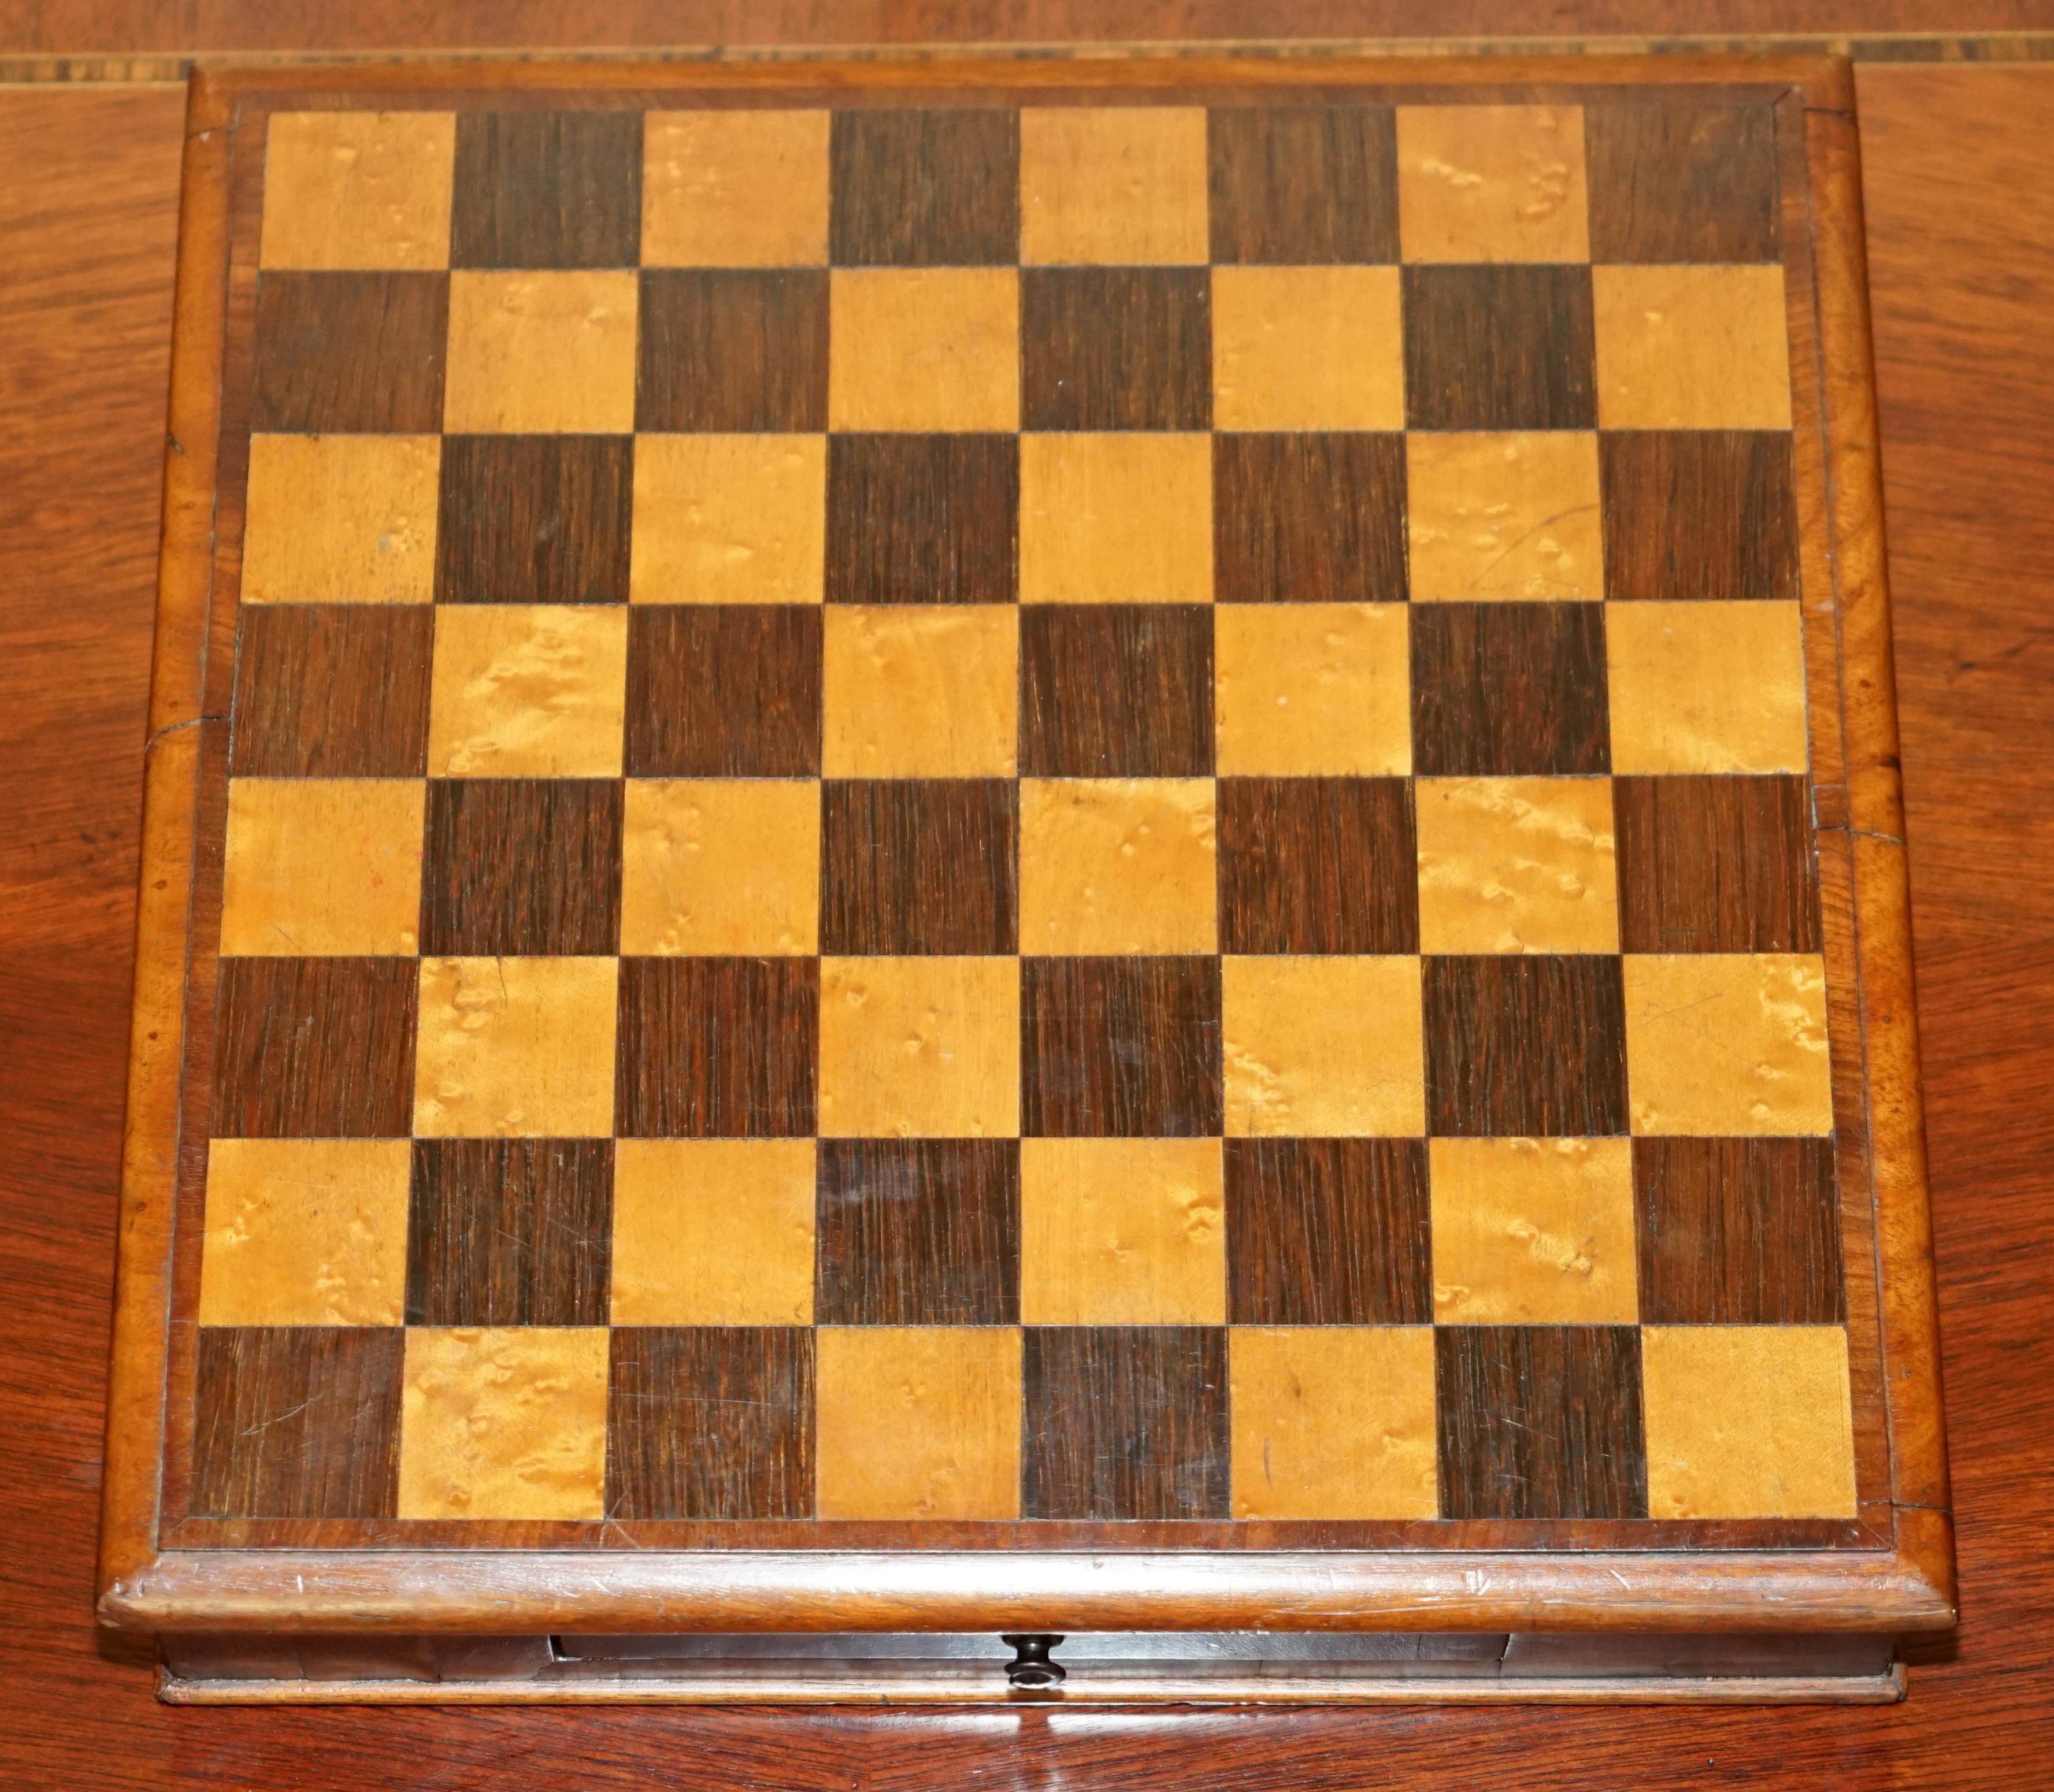 19th Century Jaques London Victorian Burr Walnut Chessboard Staunton Chess Backgammon Pieces